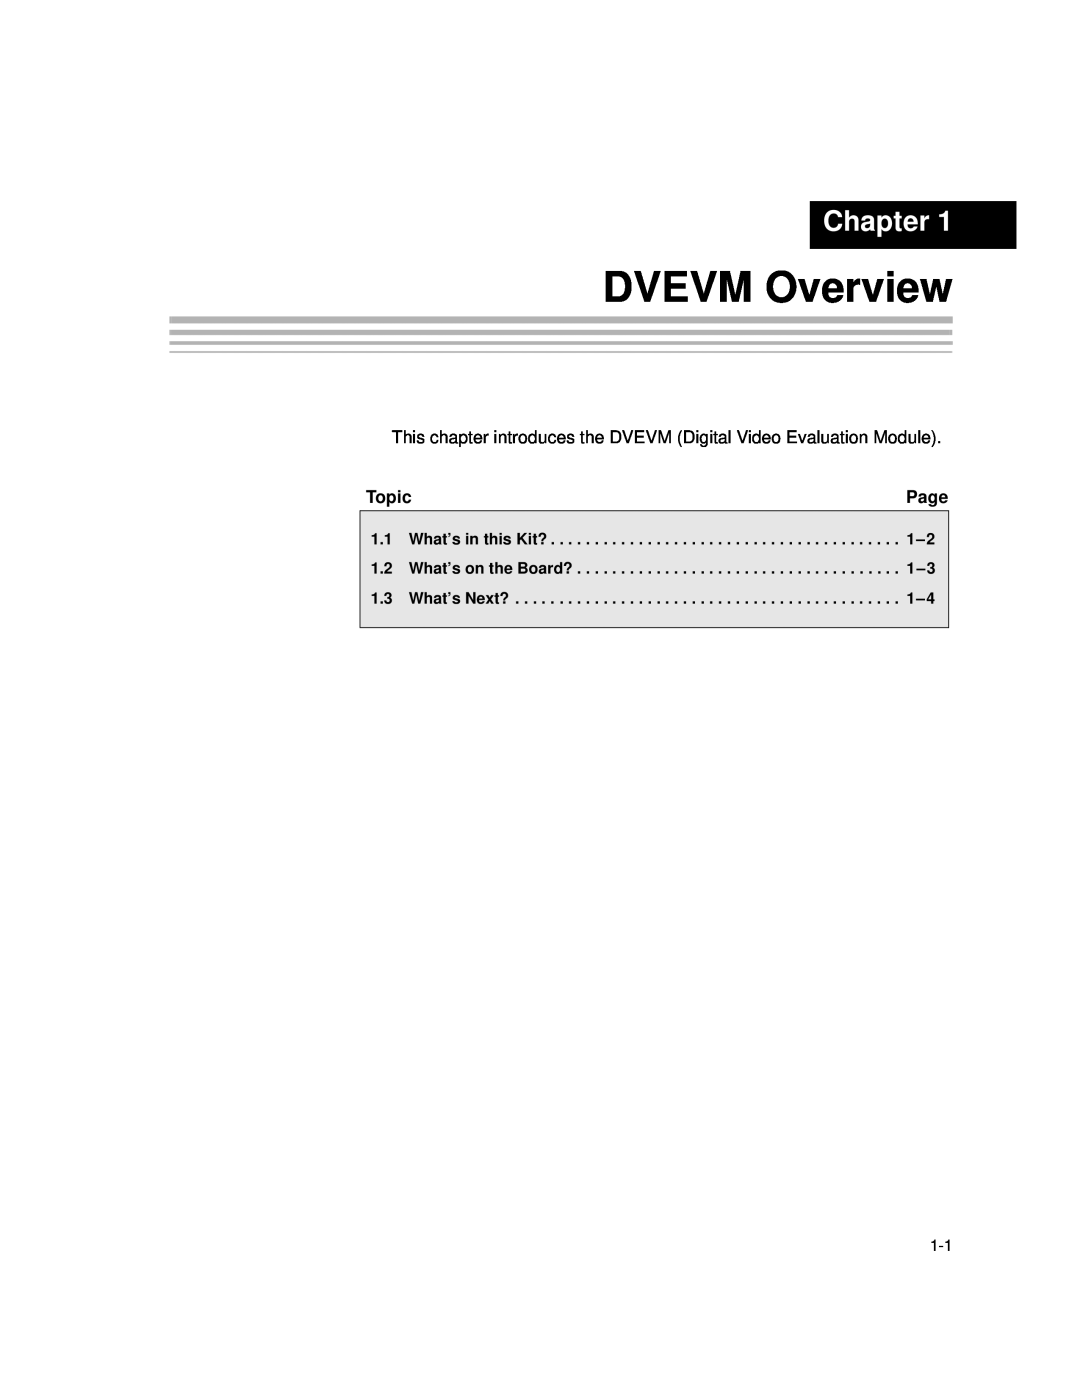 Texas Instruments TMS320DM357 DVEVM v2.05 manual DVEVM Overview, Chapter 